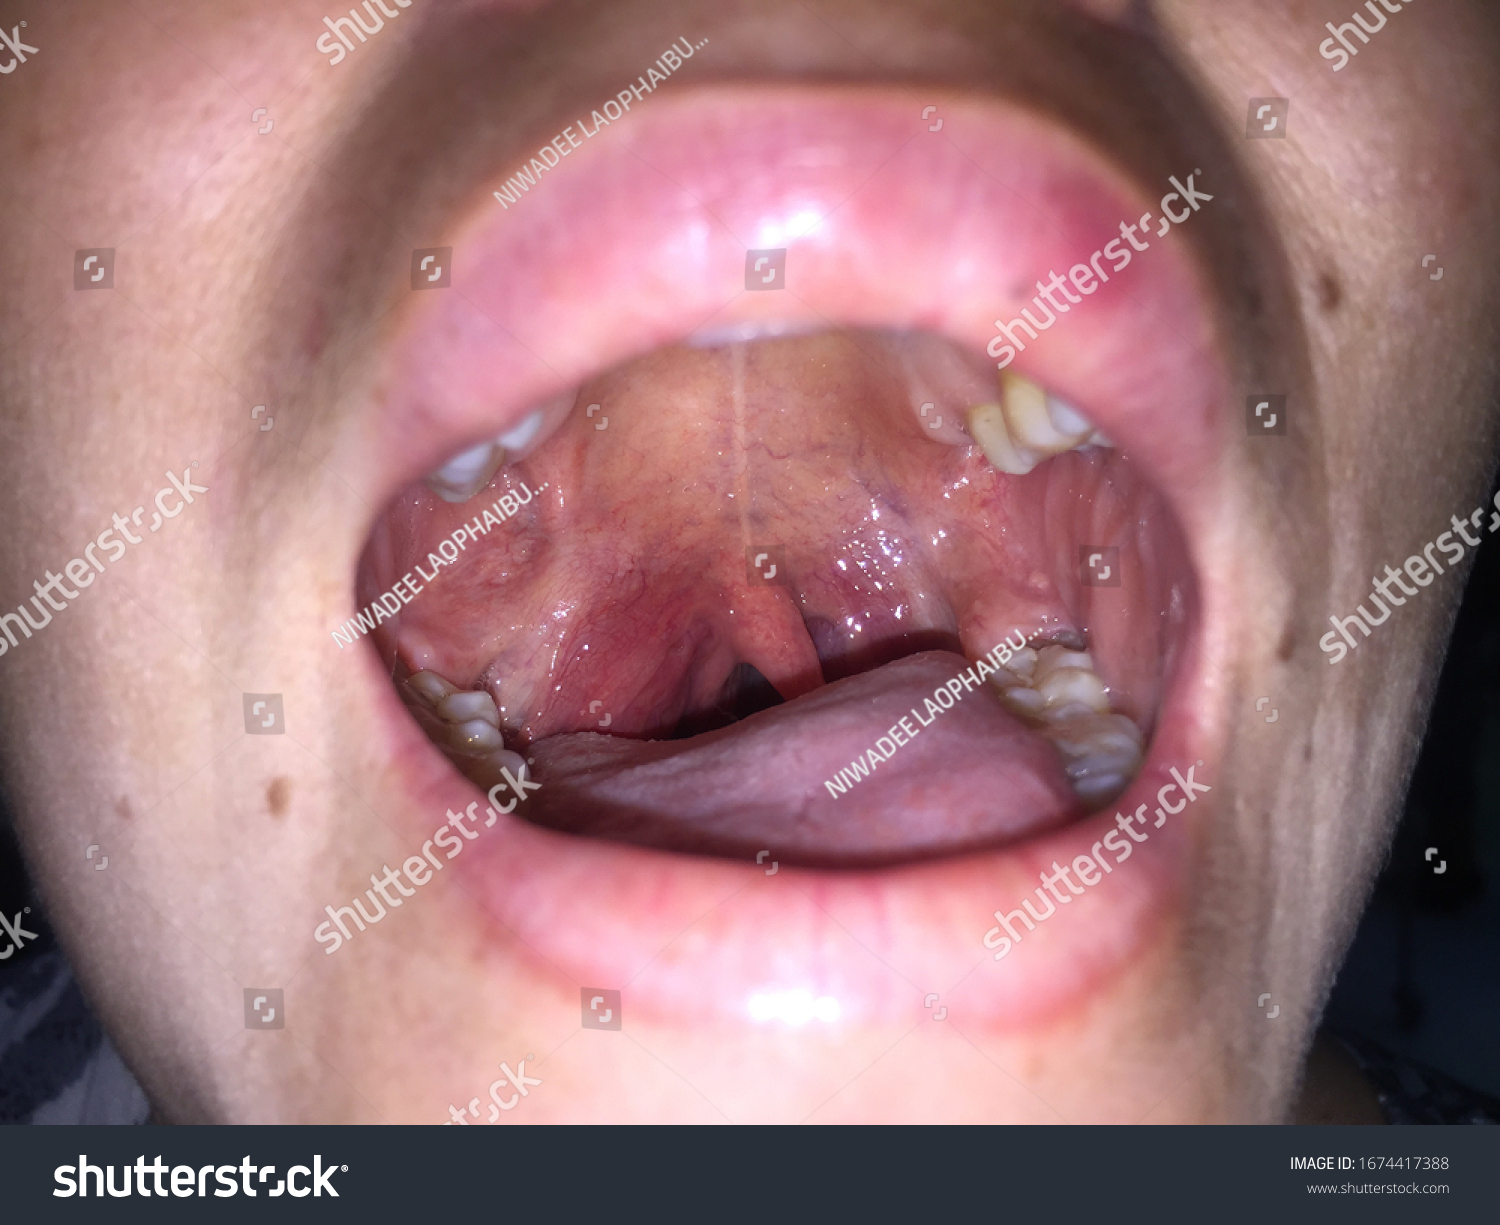 Absceso Peritonsillar Infección Dolor De Garganta Foto De Stock 1674417388 Shutterstock 